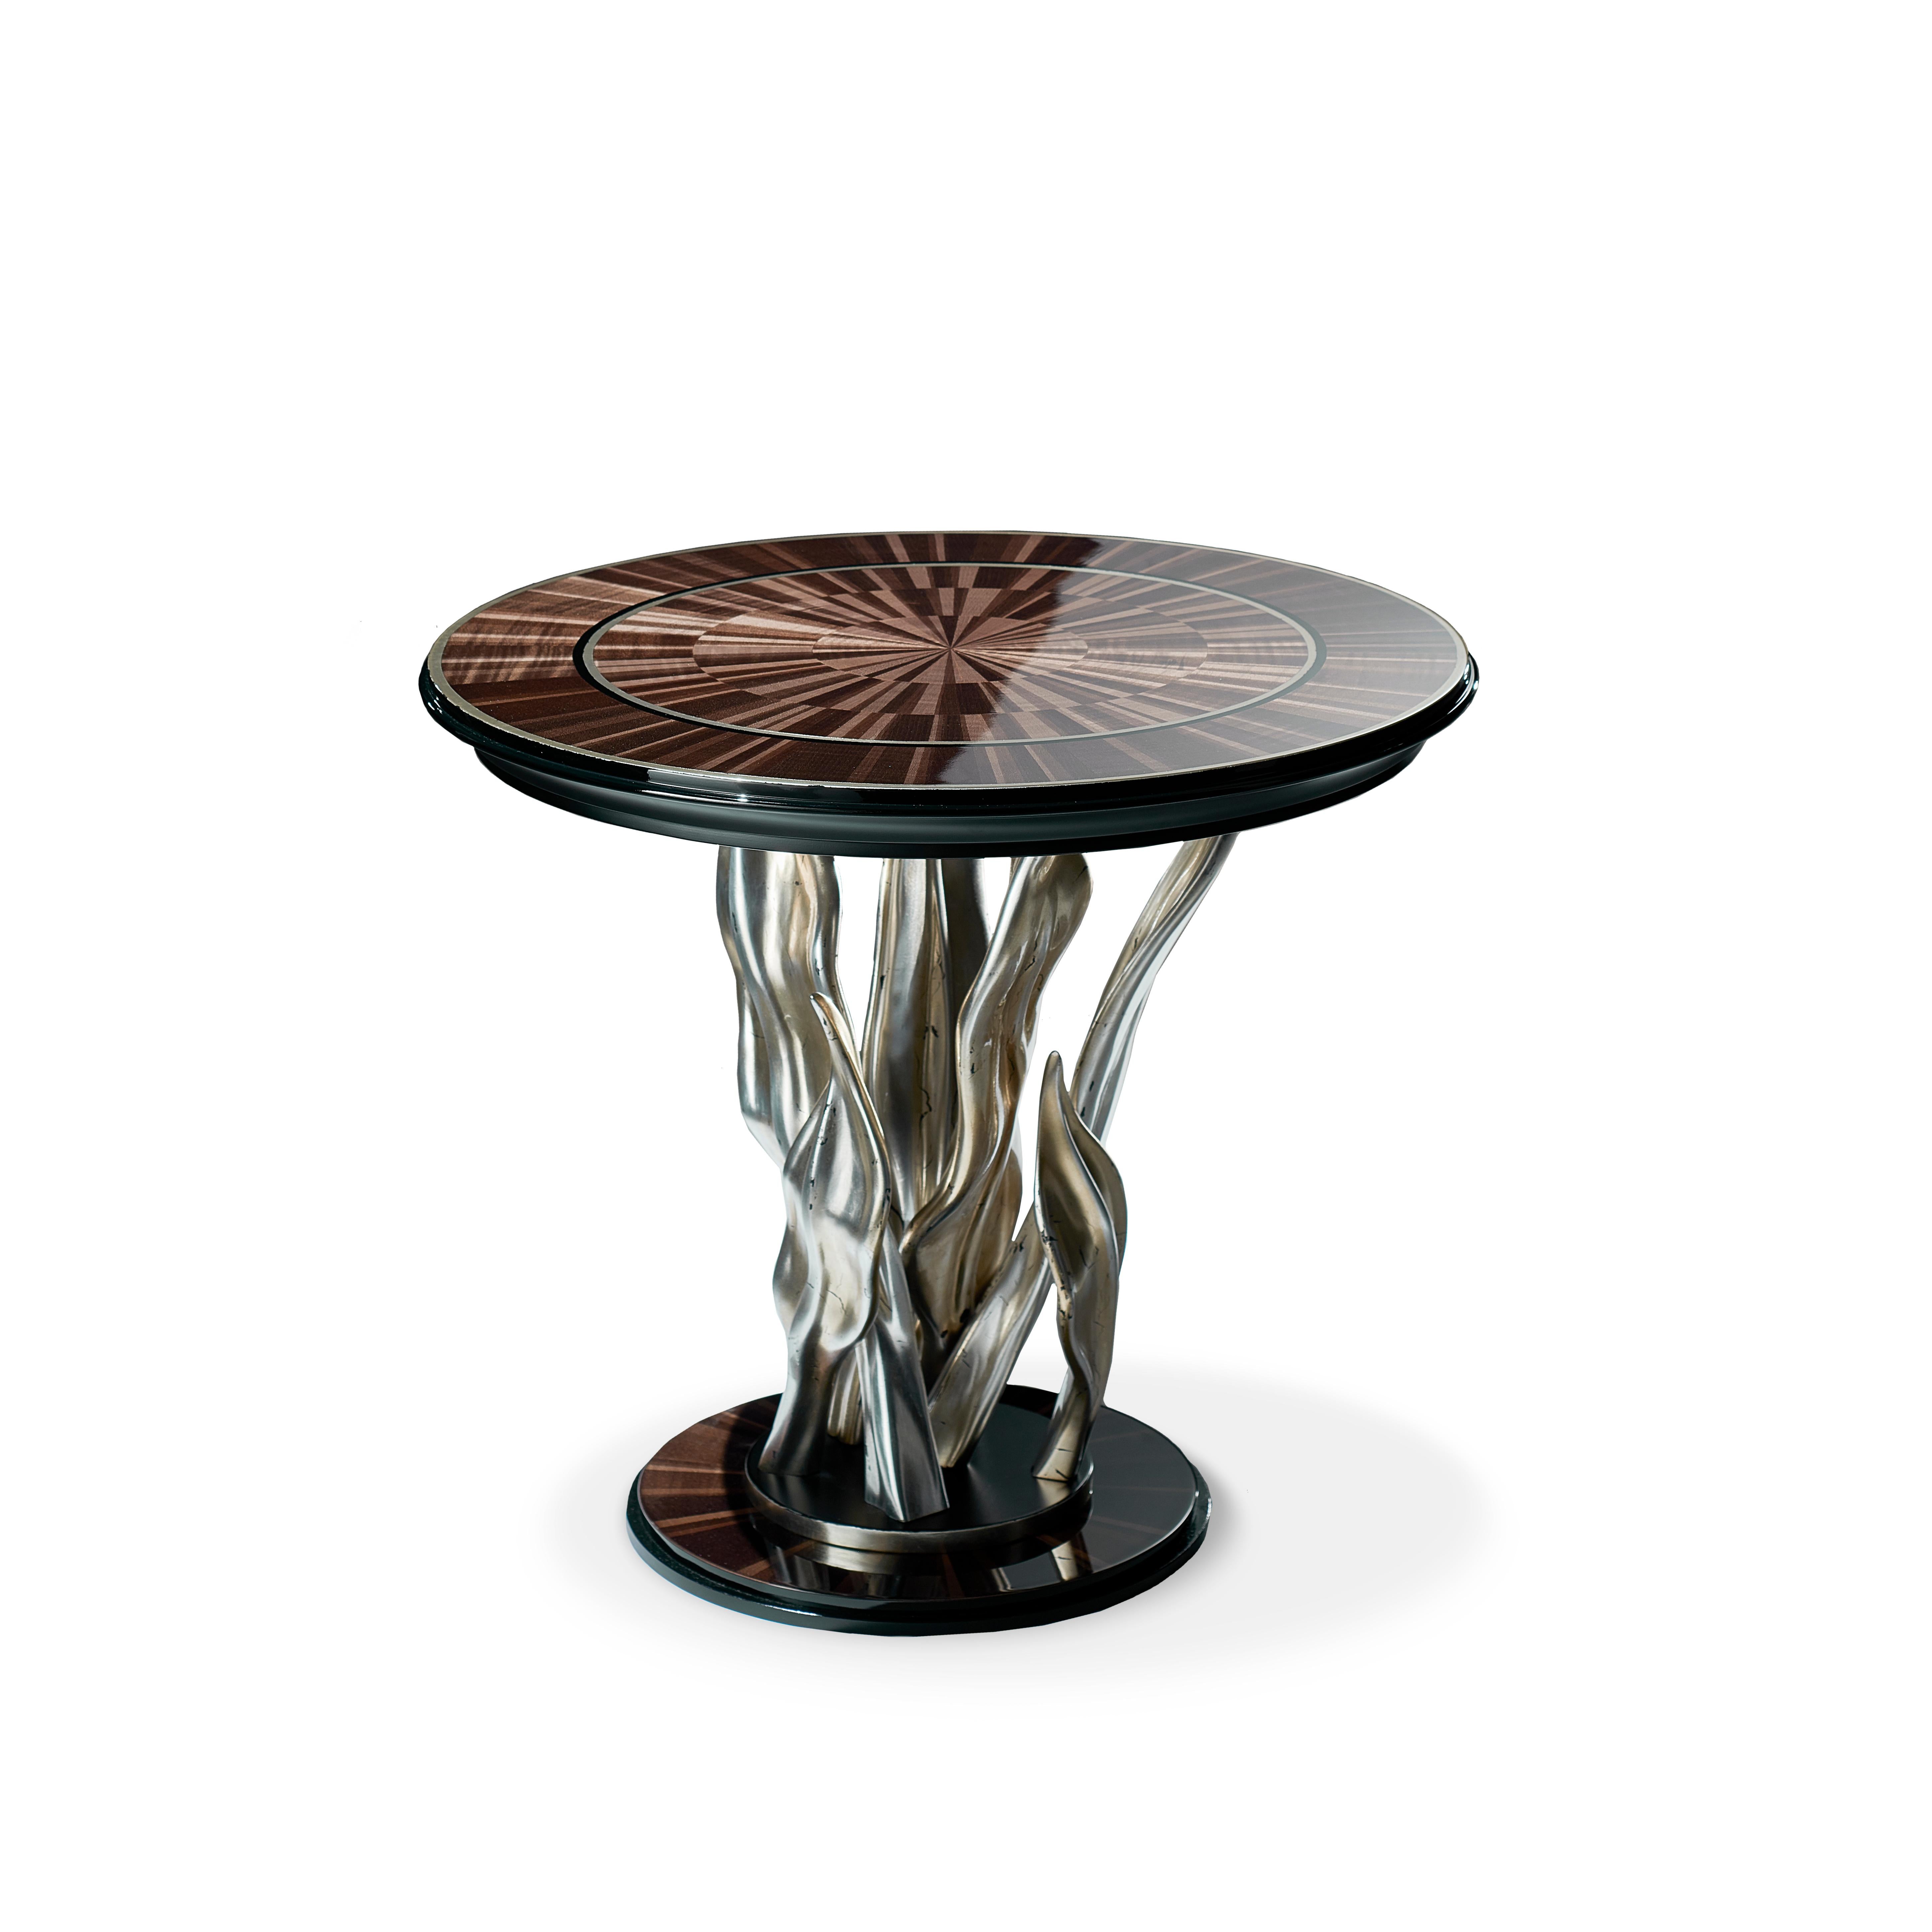 'Tobacco' Limited Edition Coffee Table from Egli Design